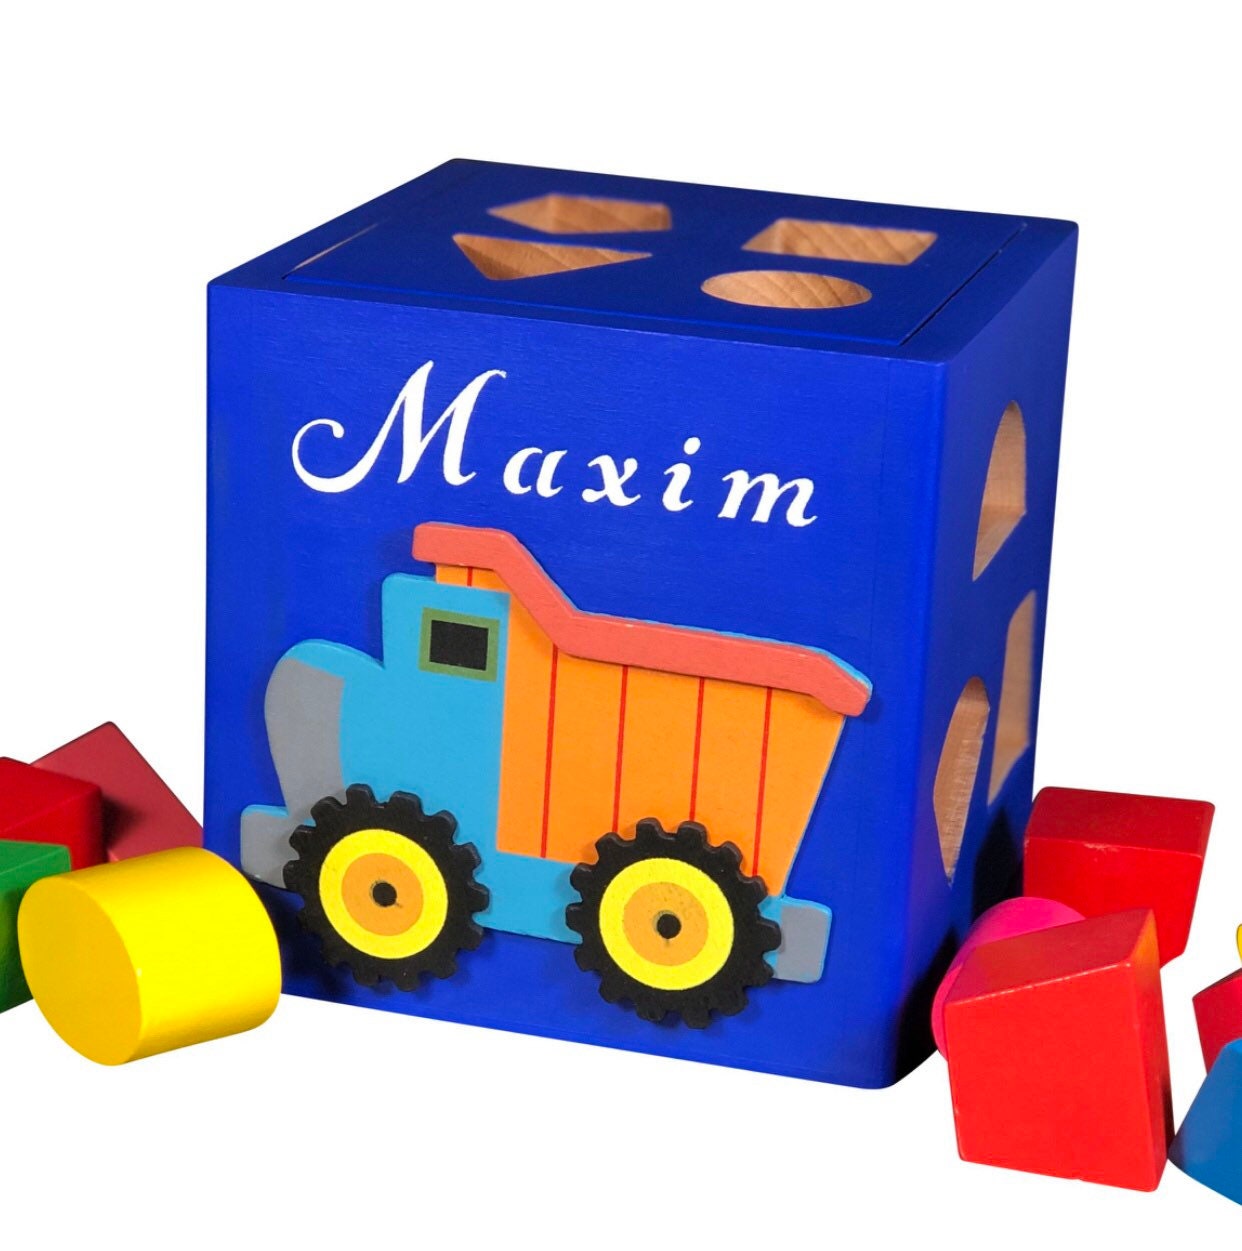 Toddler wood toys / custom shape sorter activity